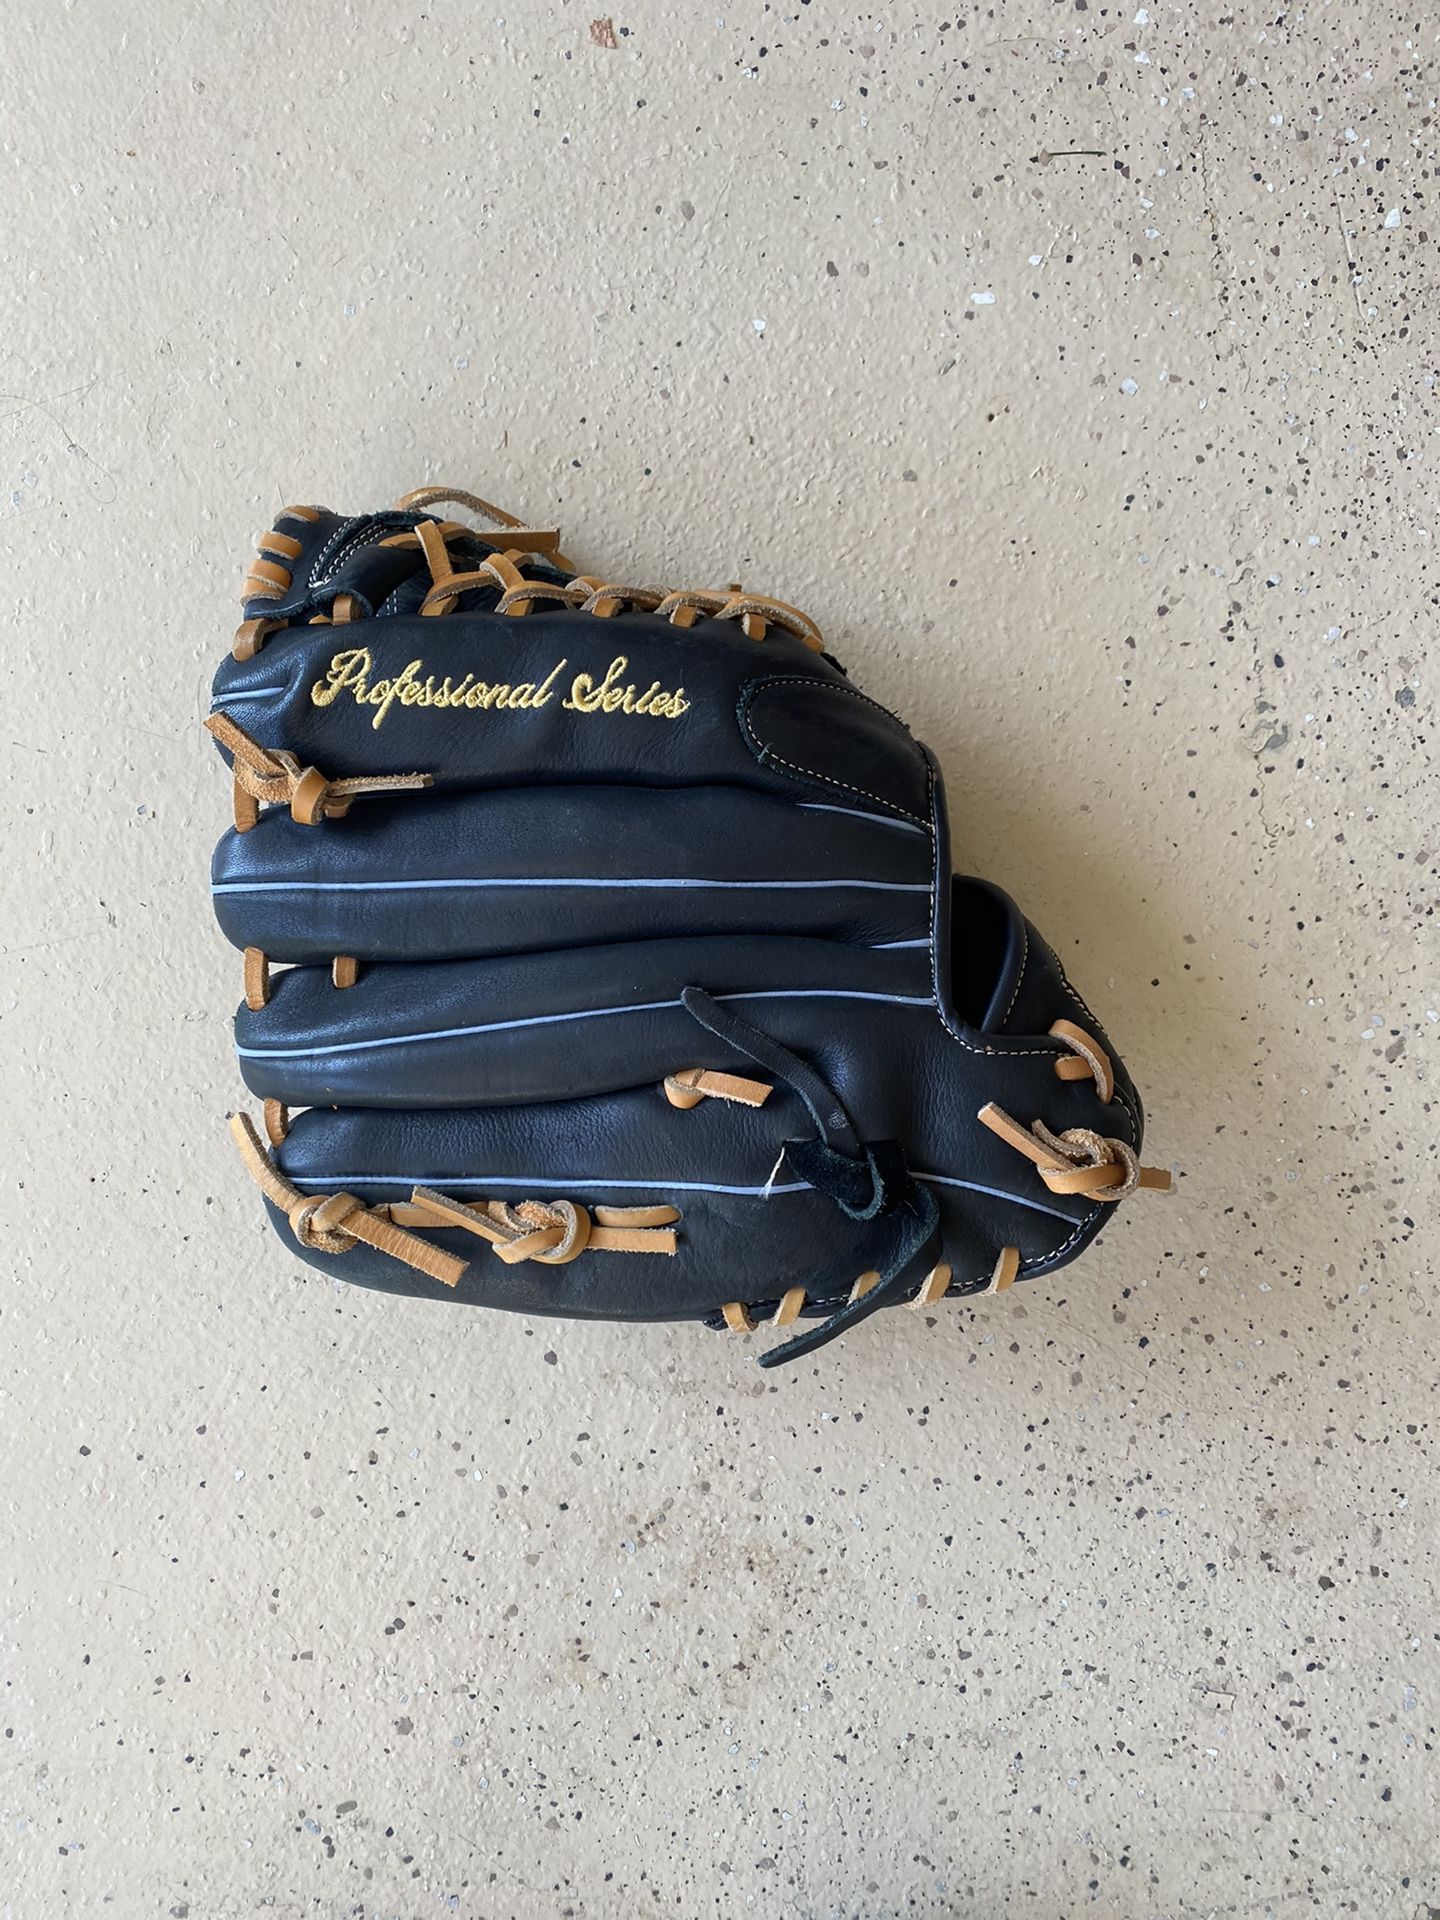 Franklin Professional Series 12” Baseball Glove